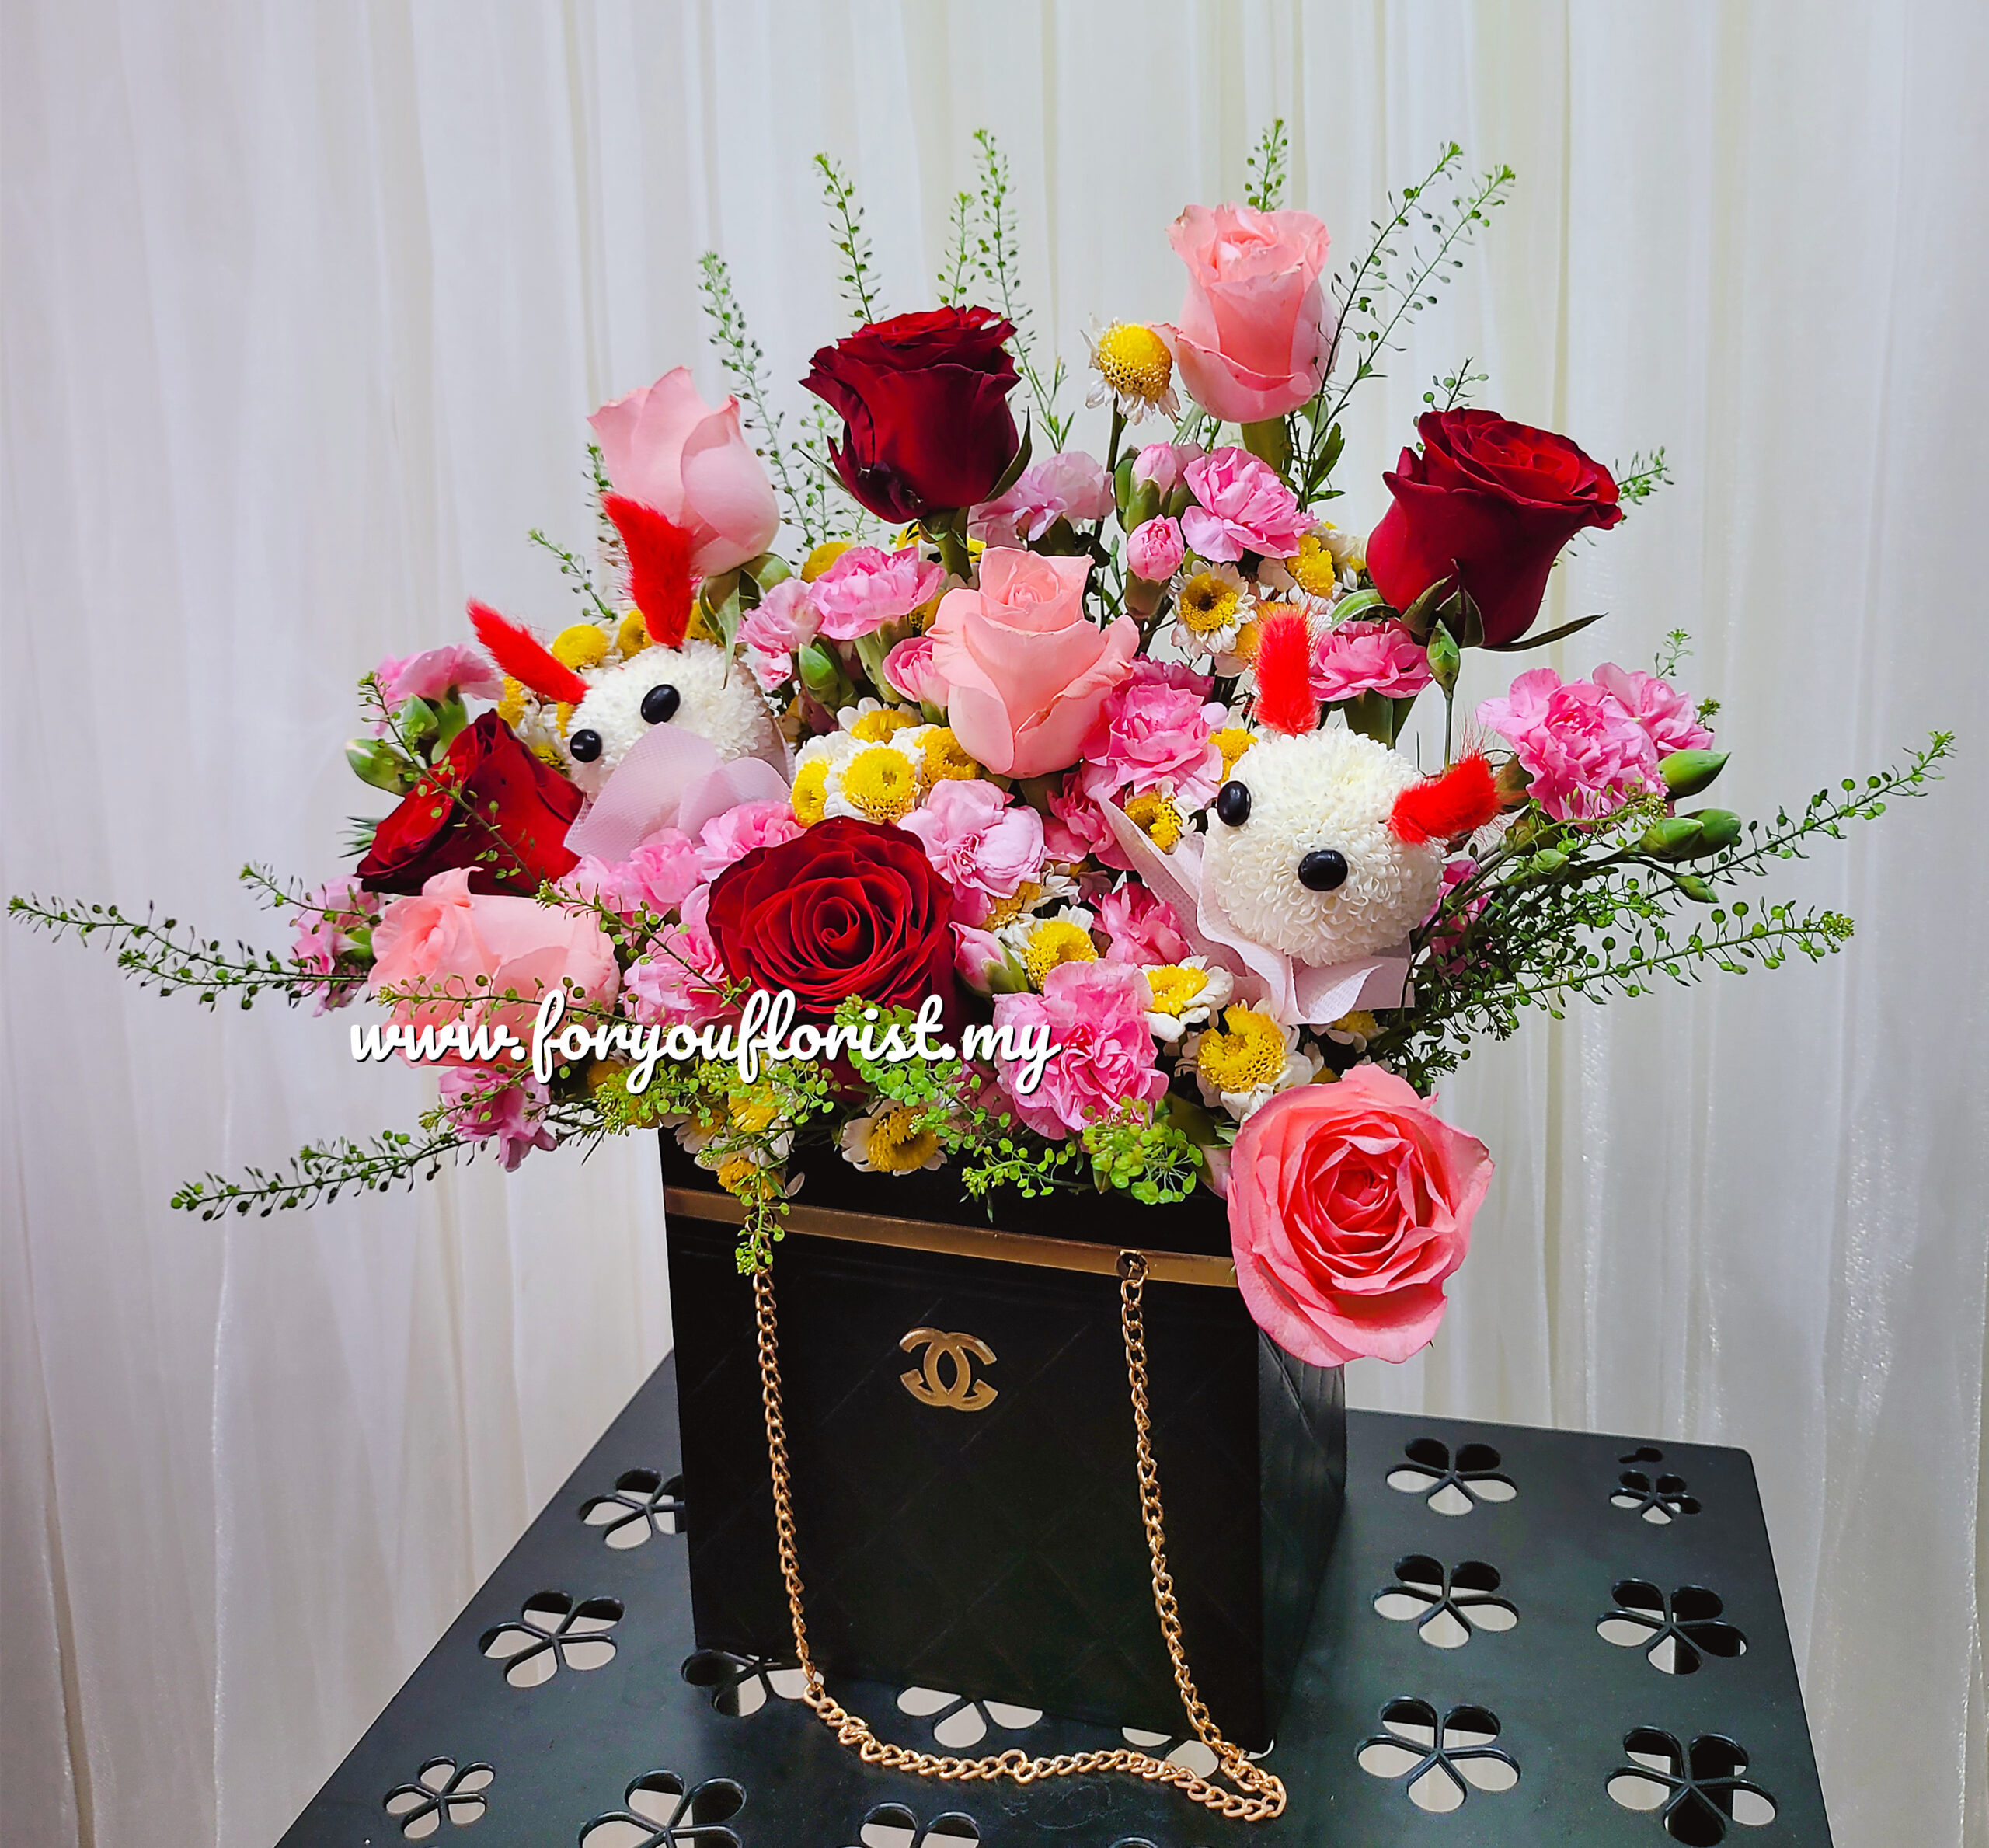 Flower Chanel Box - Foryou Flowers, Penang Florist